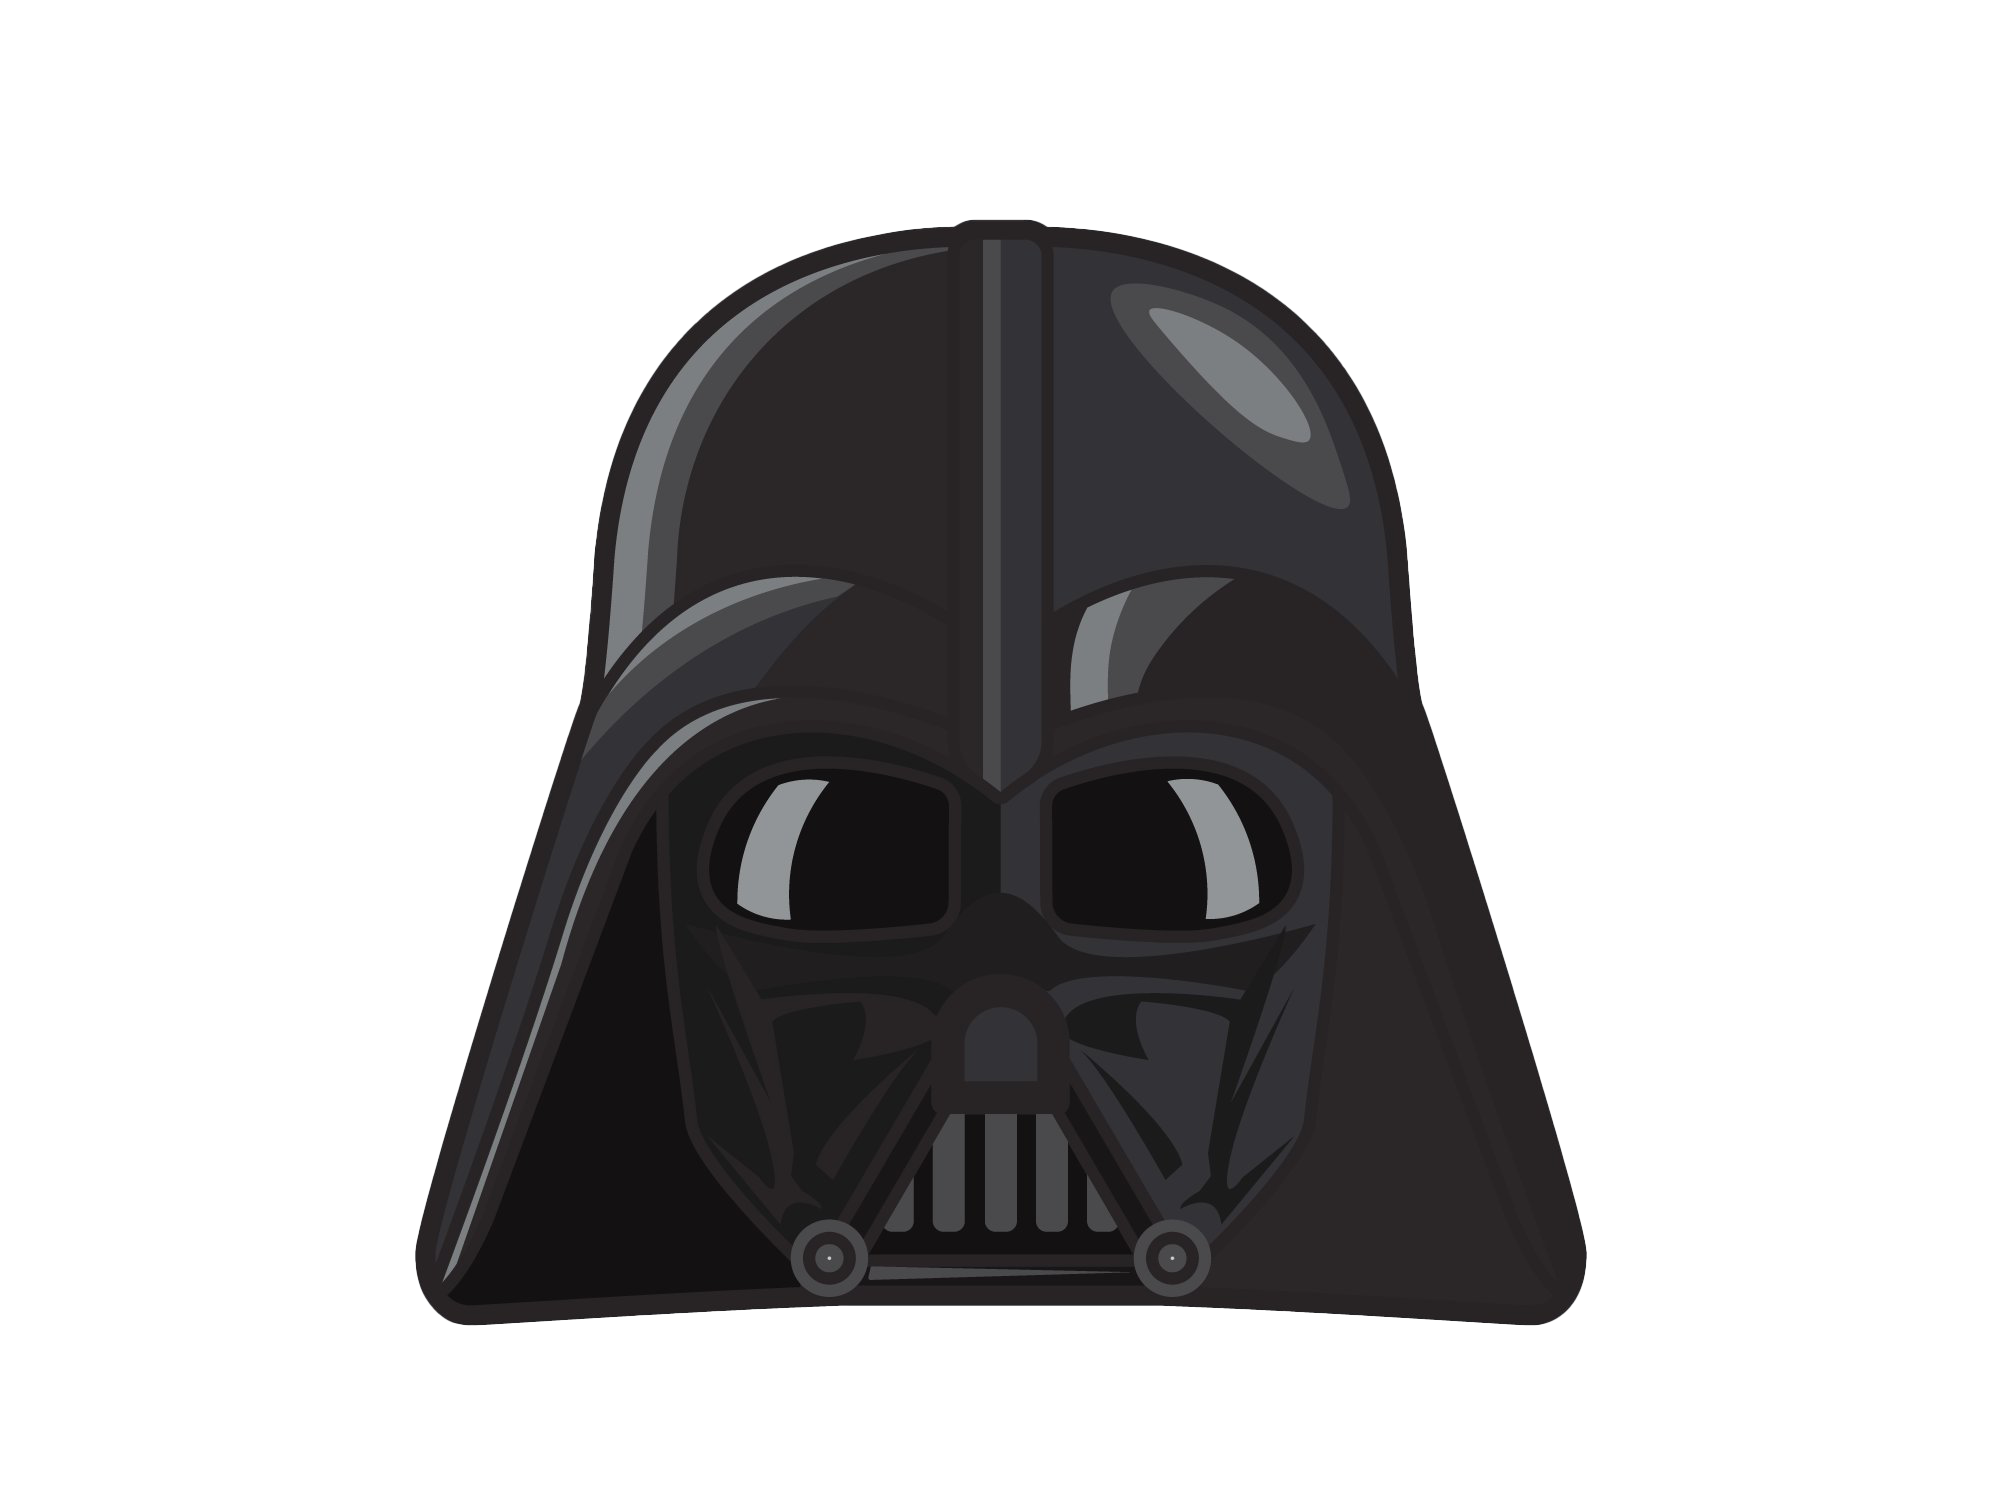 Vader Pic Darth Helmet Free Download Image PNG Image